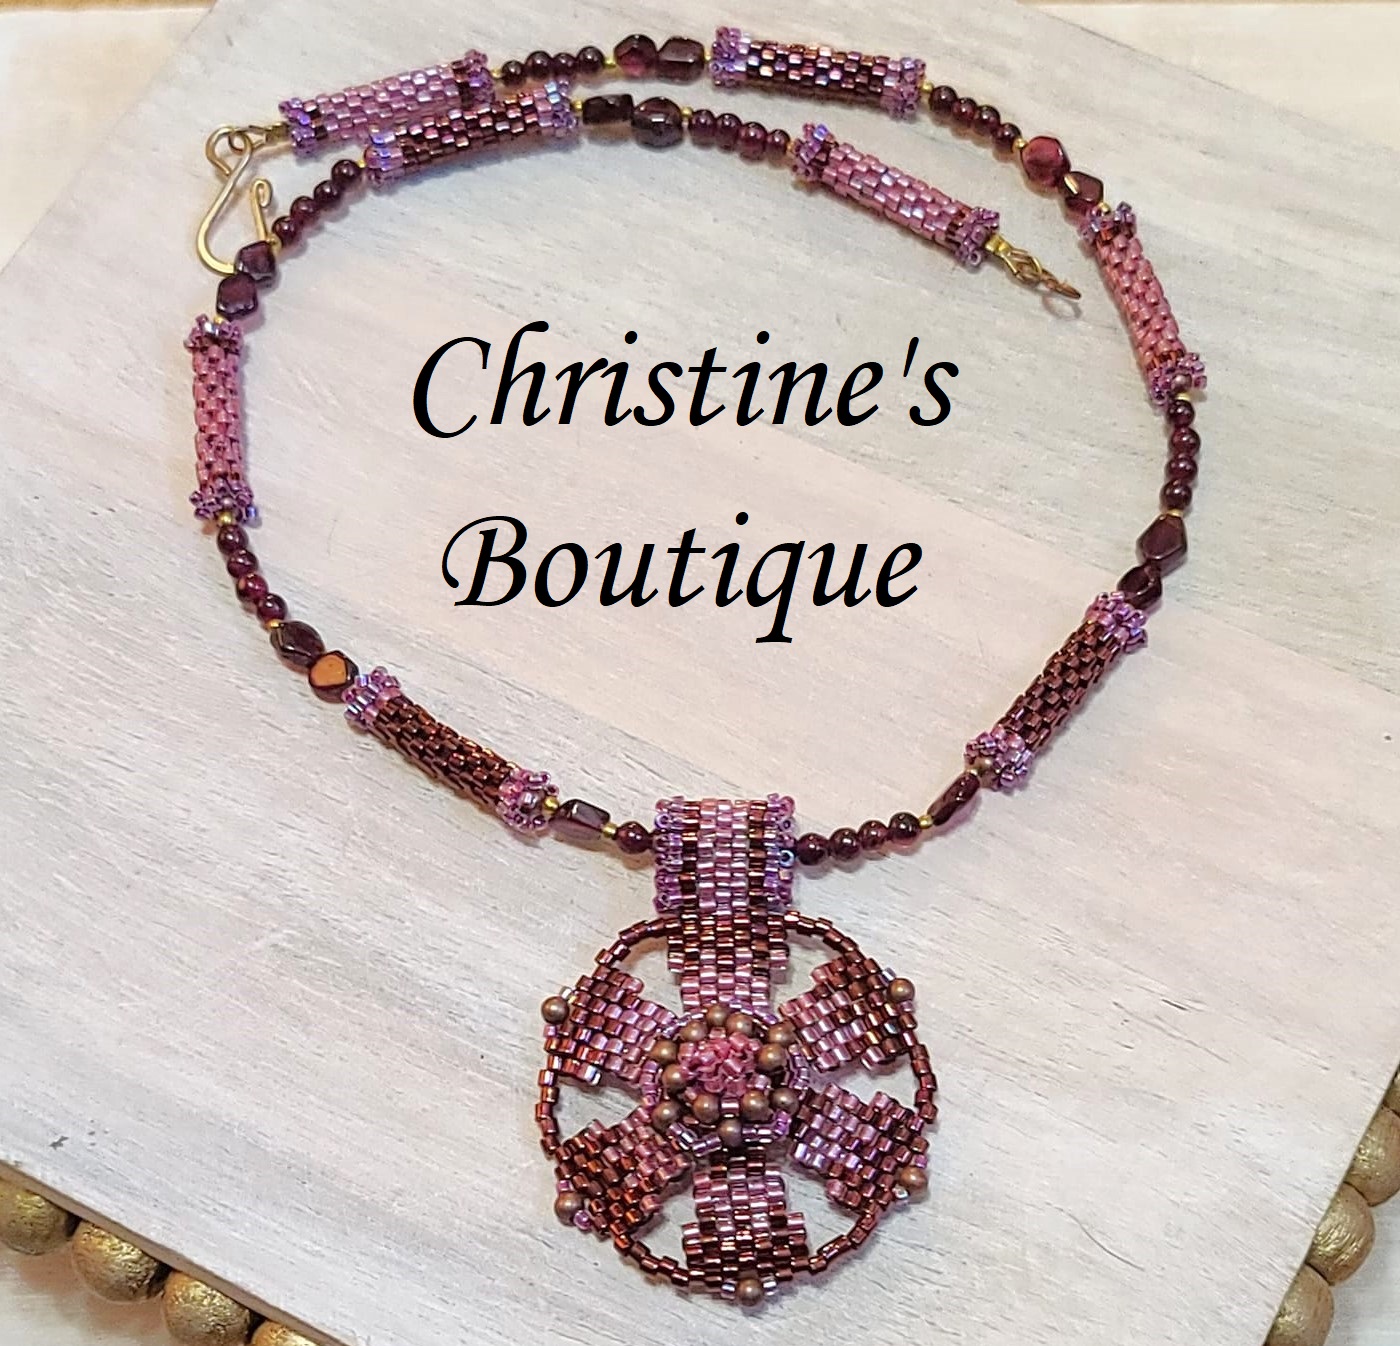 Garnet pendant necklace, center flower design with gems - Click Image to Close